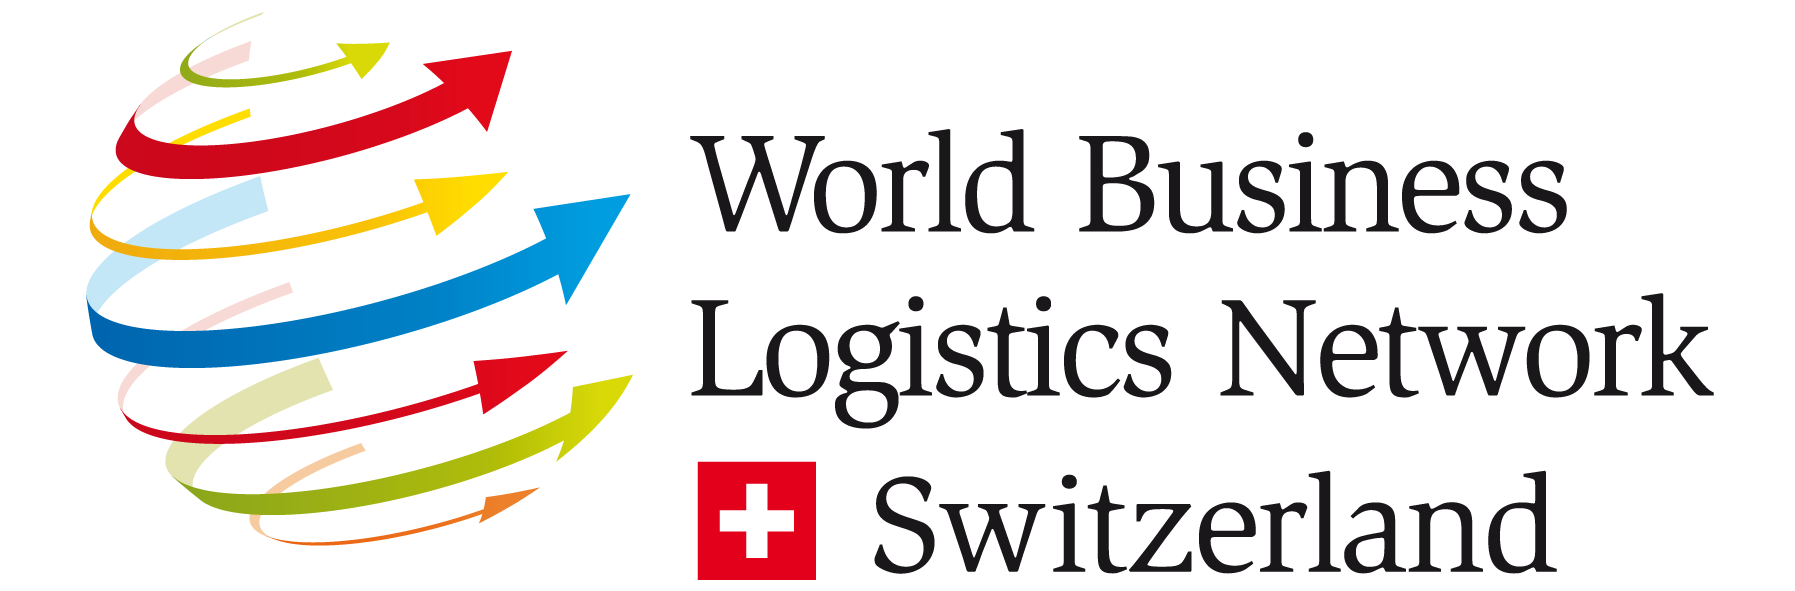 World Business Logistics Network Switzerland